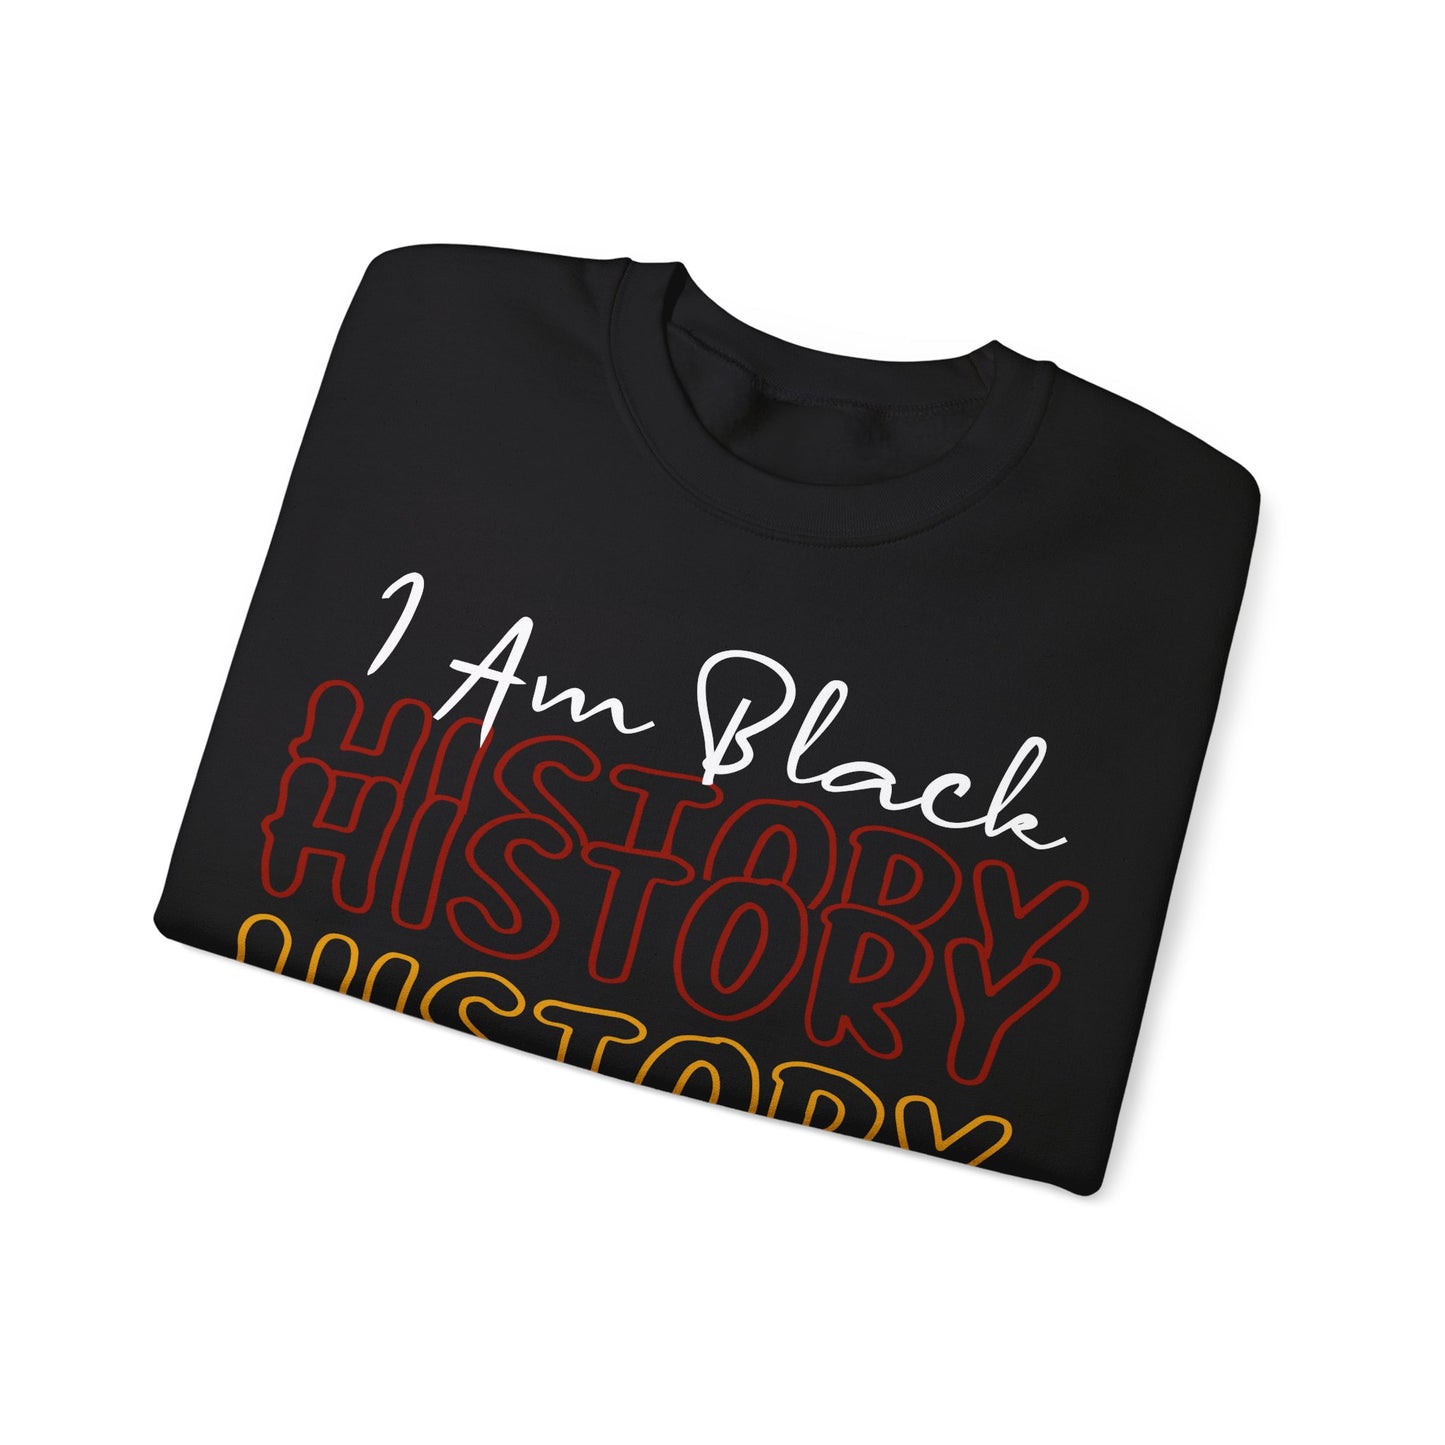 Inspirational (I Am Black History/ Unisex Heavy Blend™ Crewneck Sweatshirt)